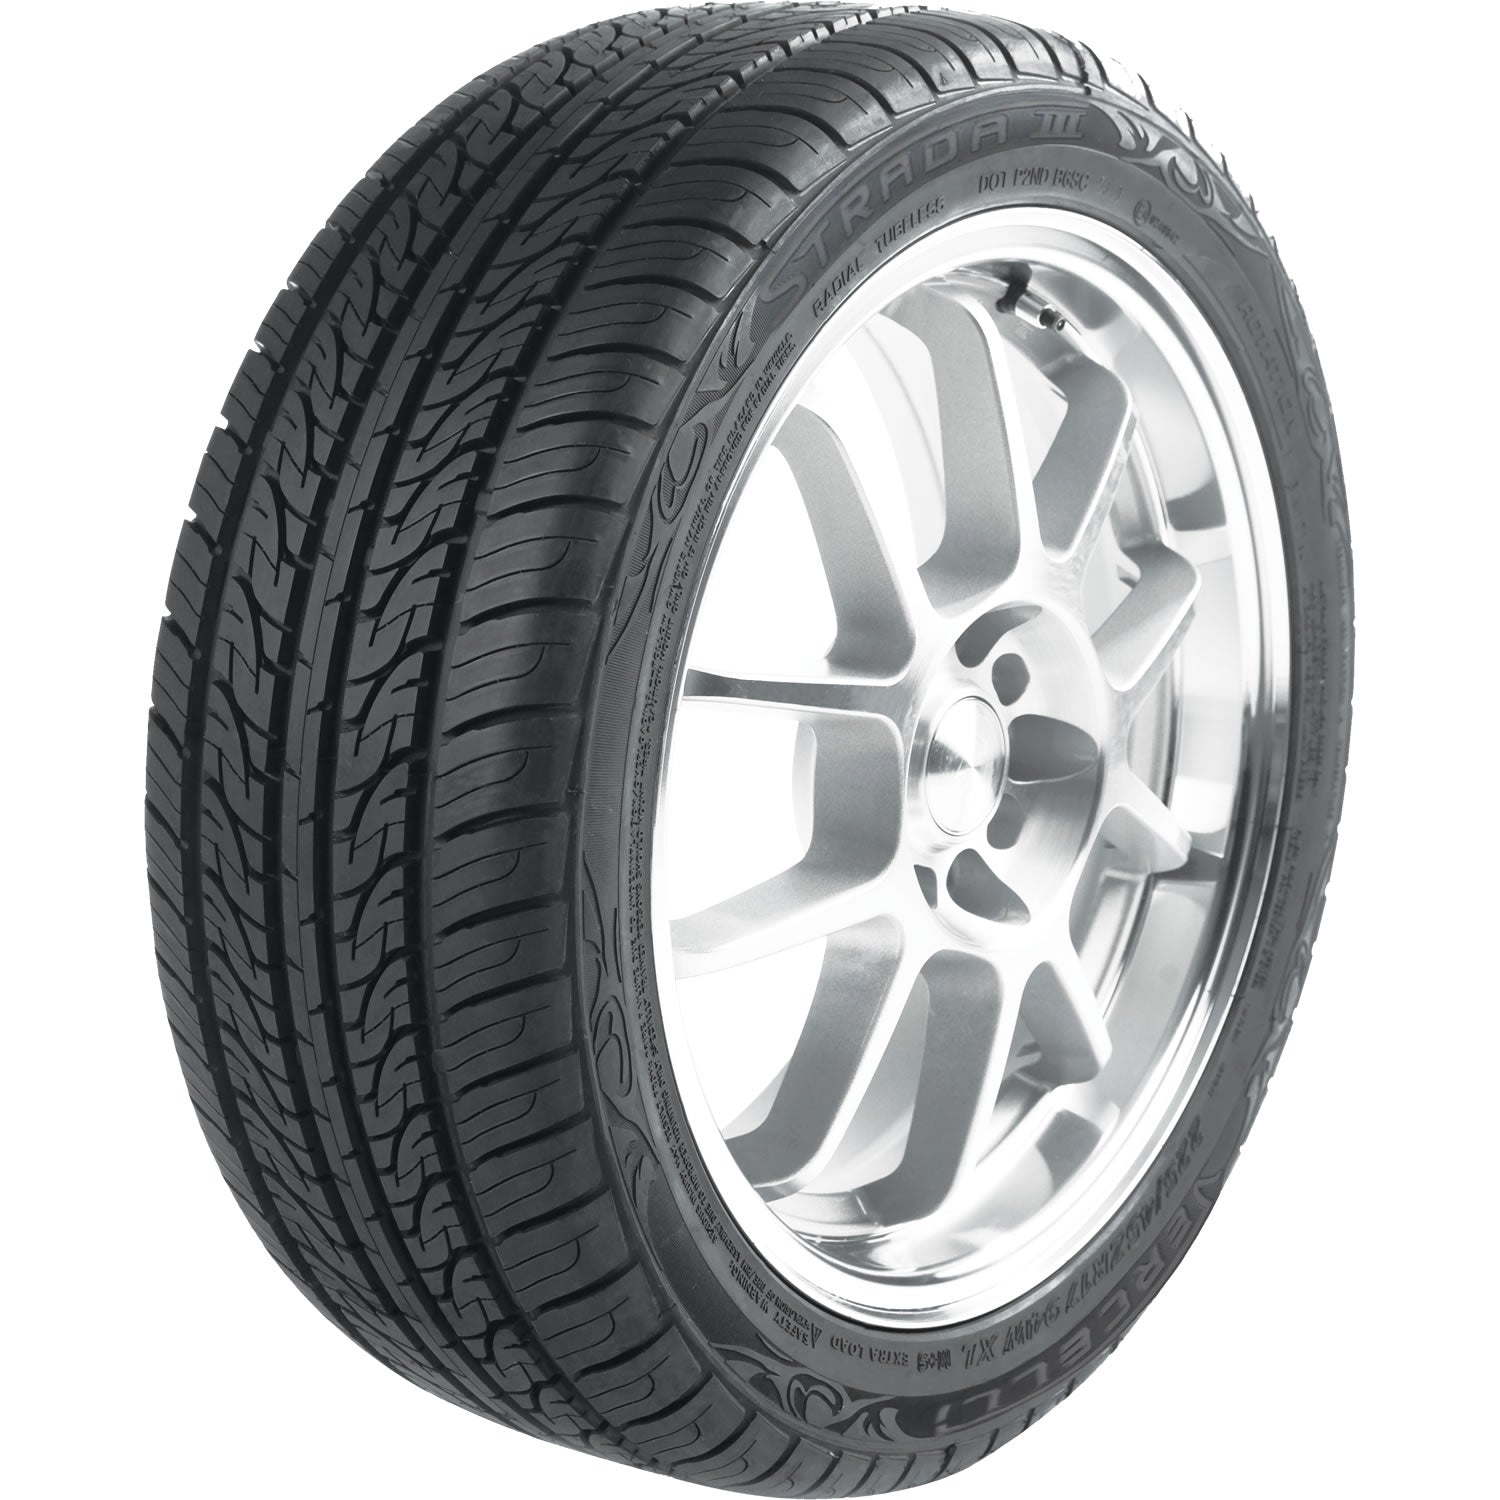 VERCELLI STRADA II 235/40R18 (25.4X9.3R 18) Tires